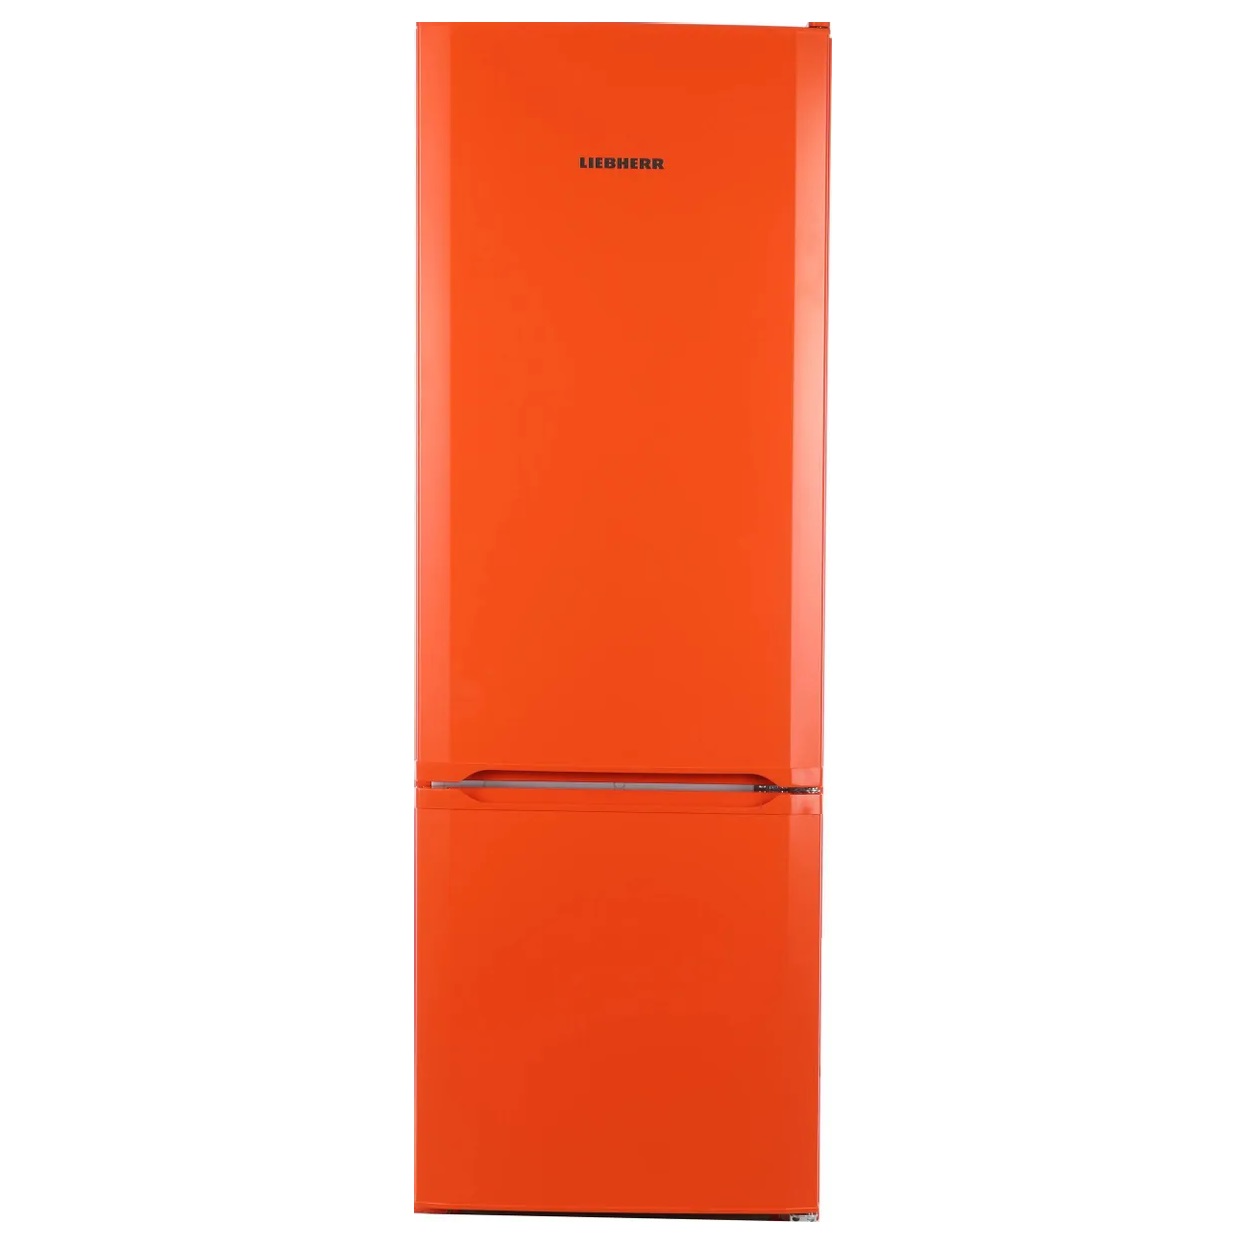 Холодильник LIEBHERR CUNO 2831-22 001 оранжевый двухкамерный холодильник liebherr cufb 2831 22 001 синий